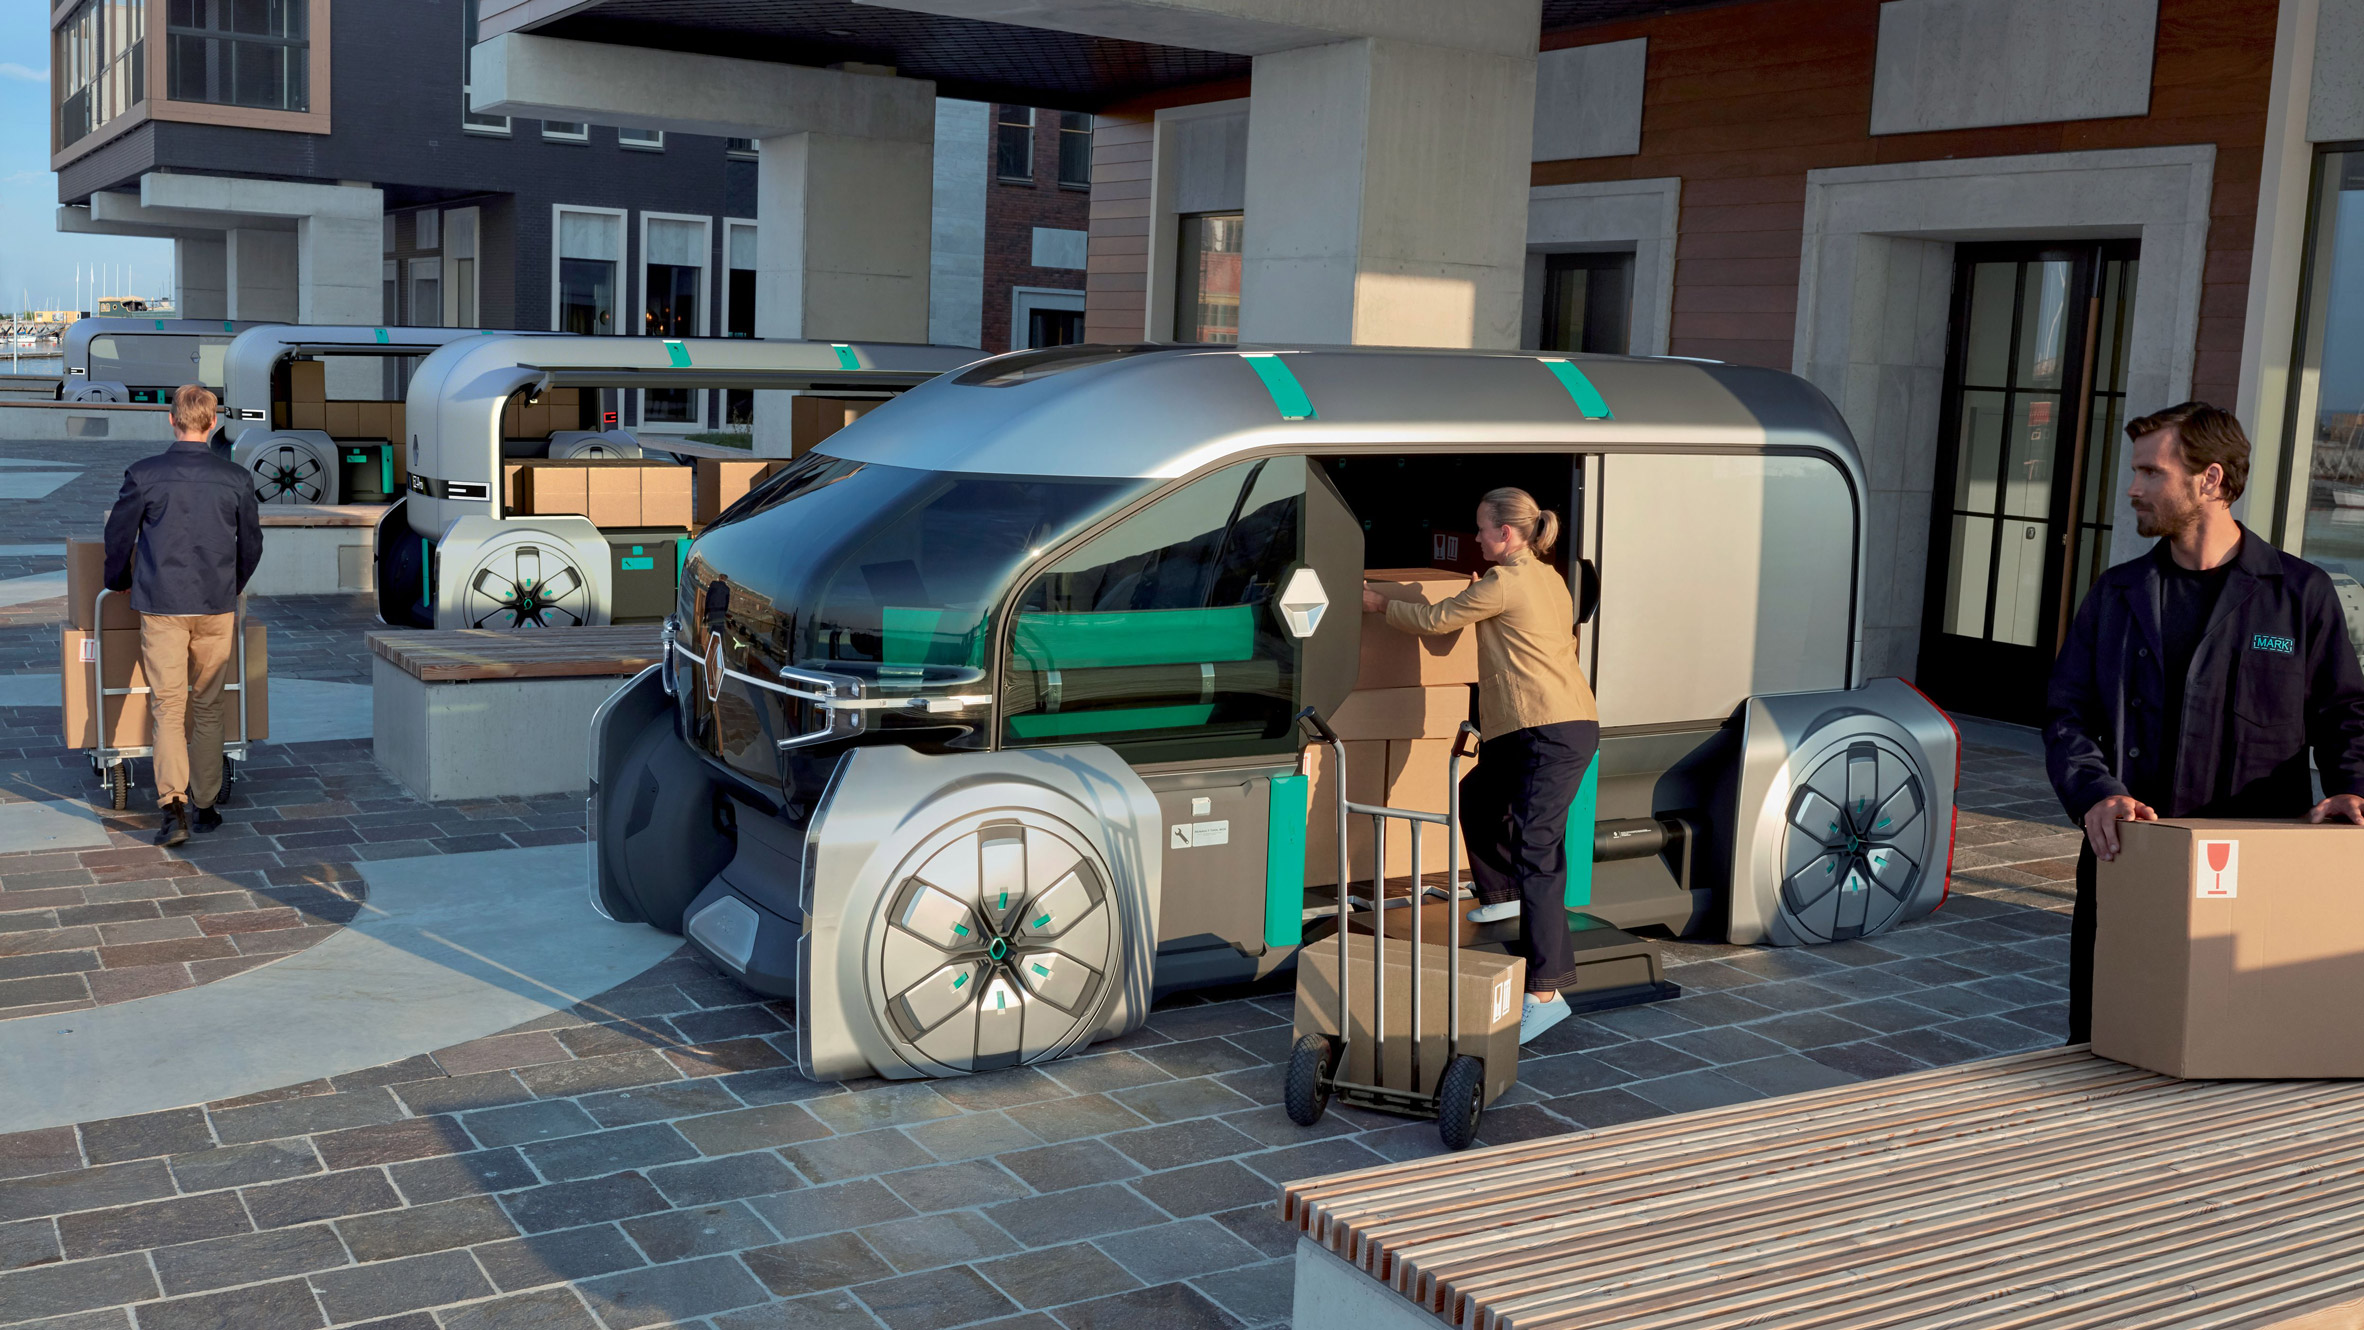 Renault imagines convoys of driverless pods that deliver parcels and pop-up shops